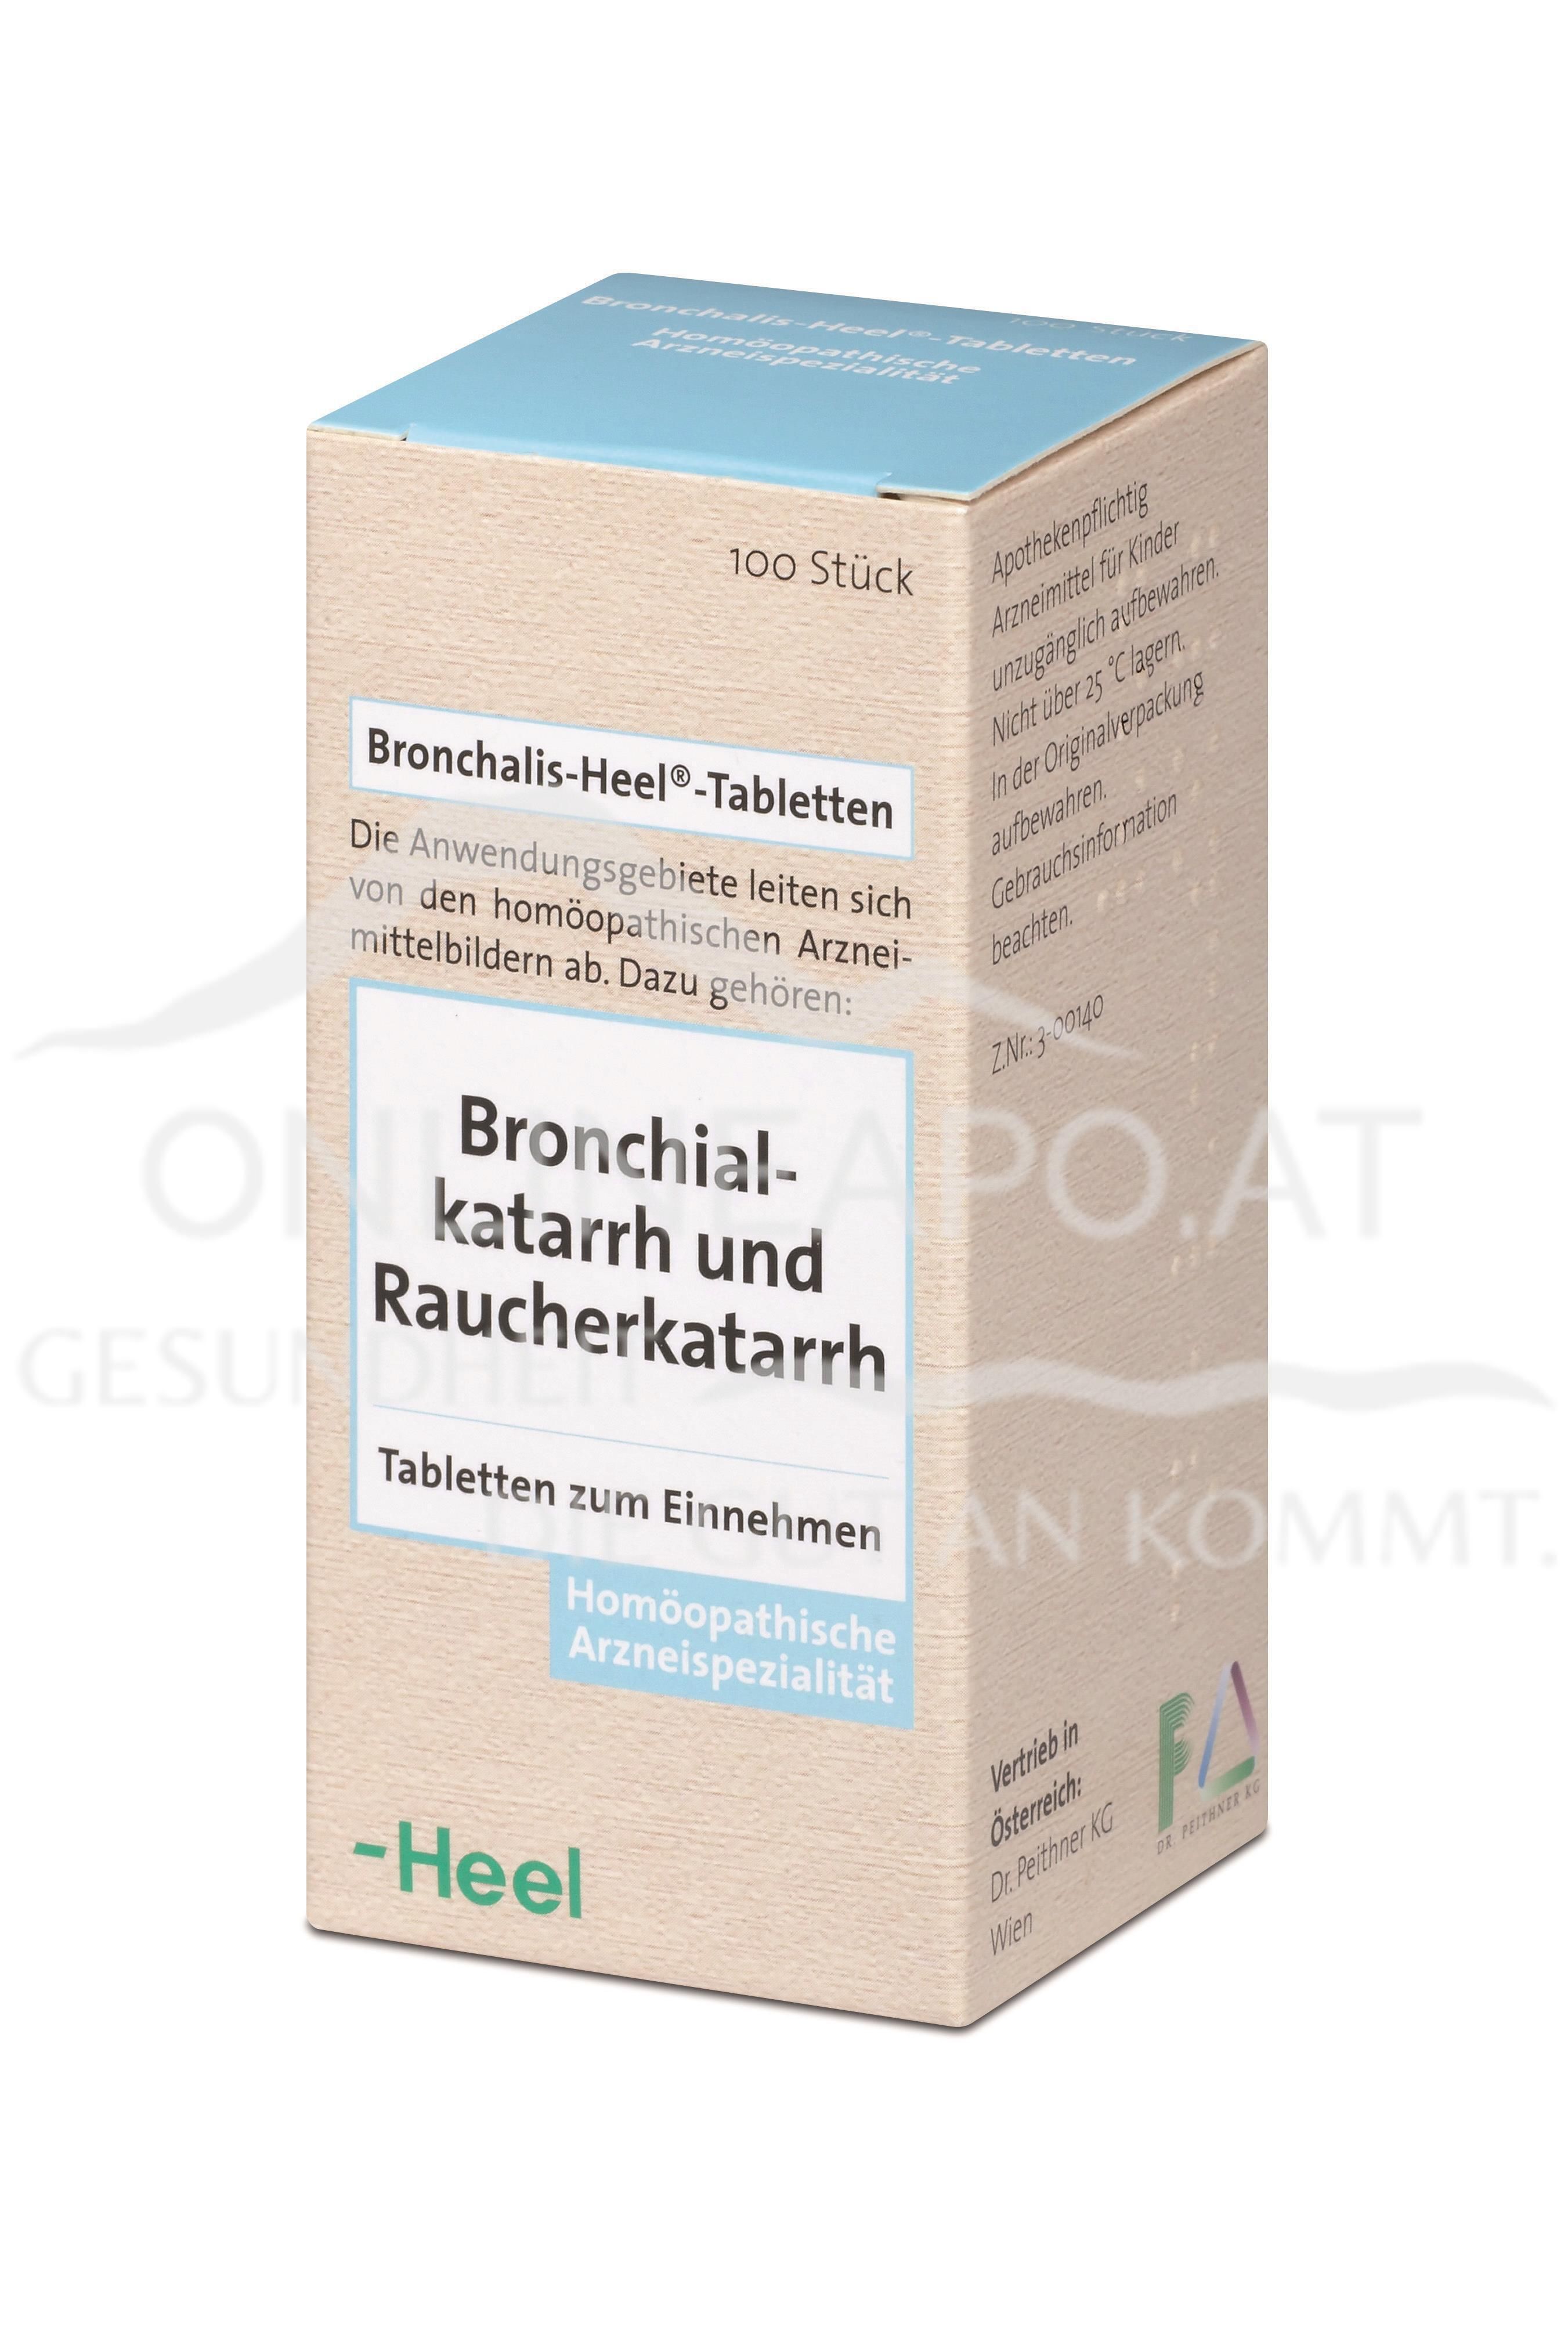 Bronchalis-Heel®